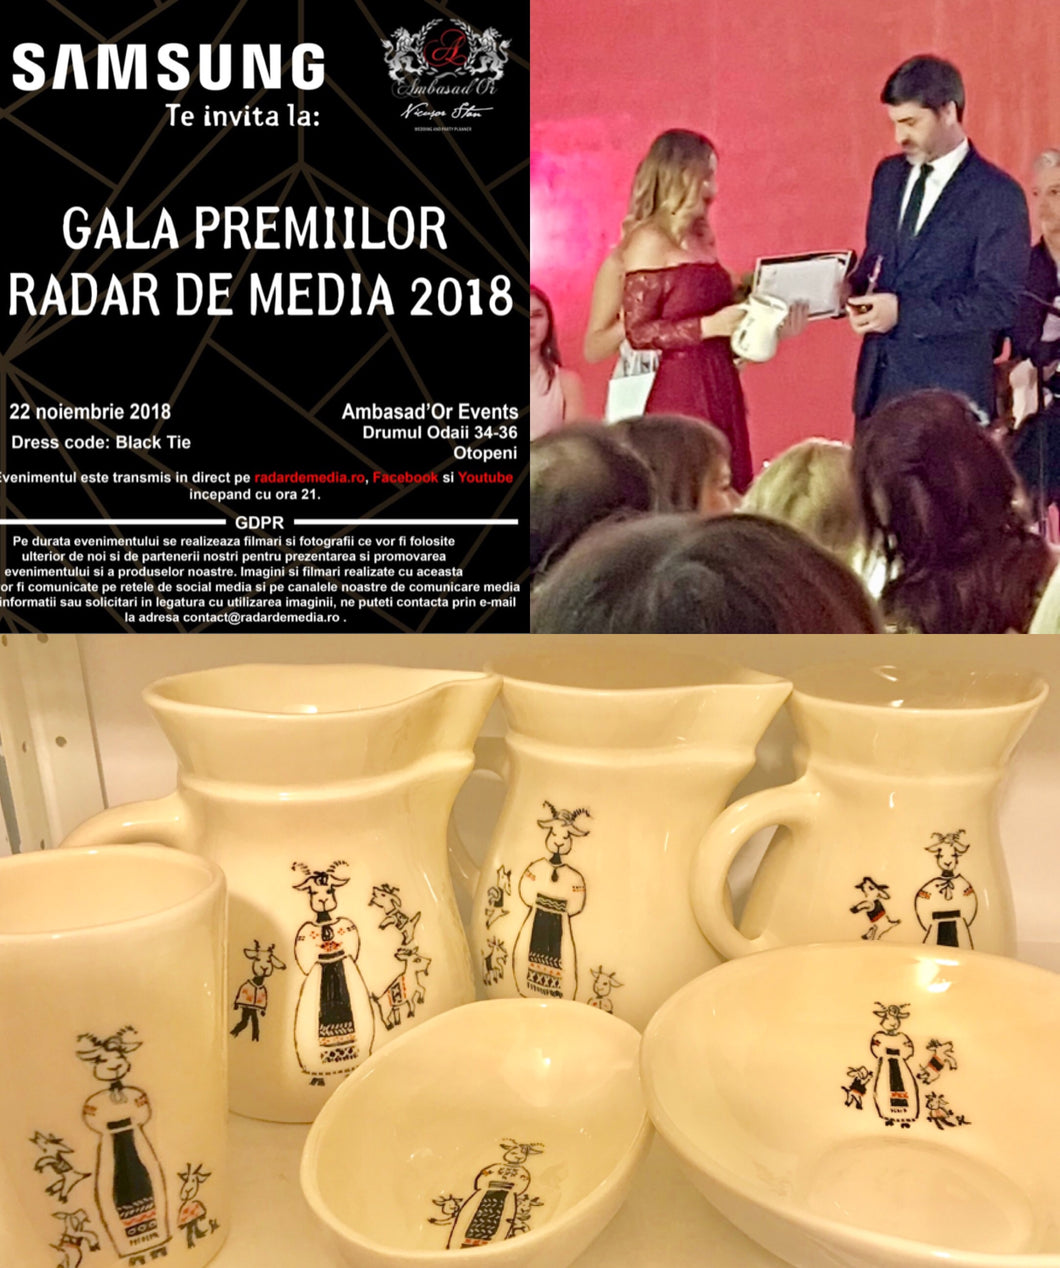 Premii Speciale Gala Radar de Media